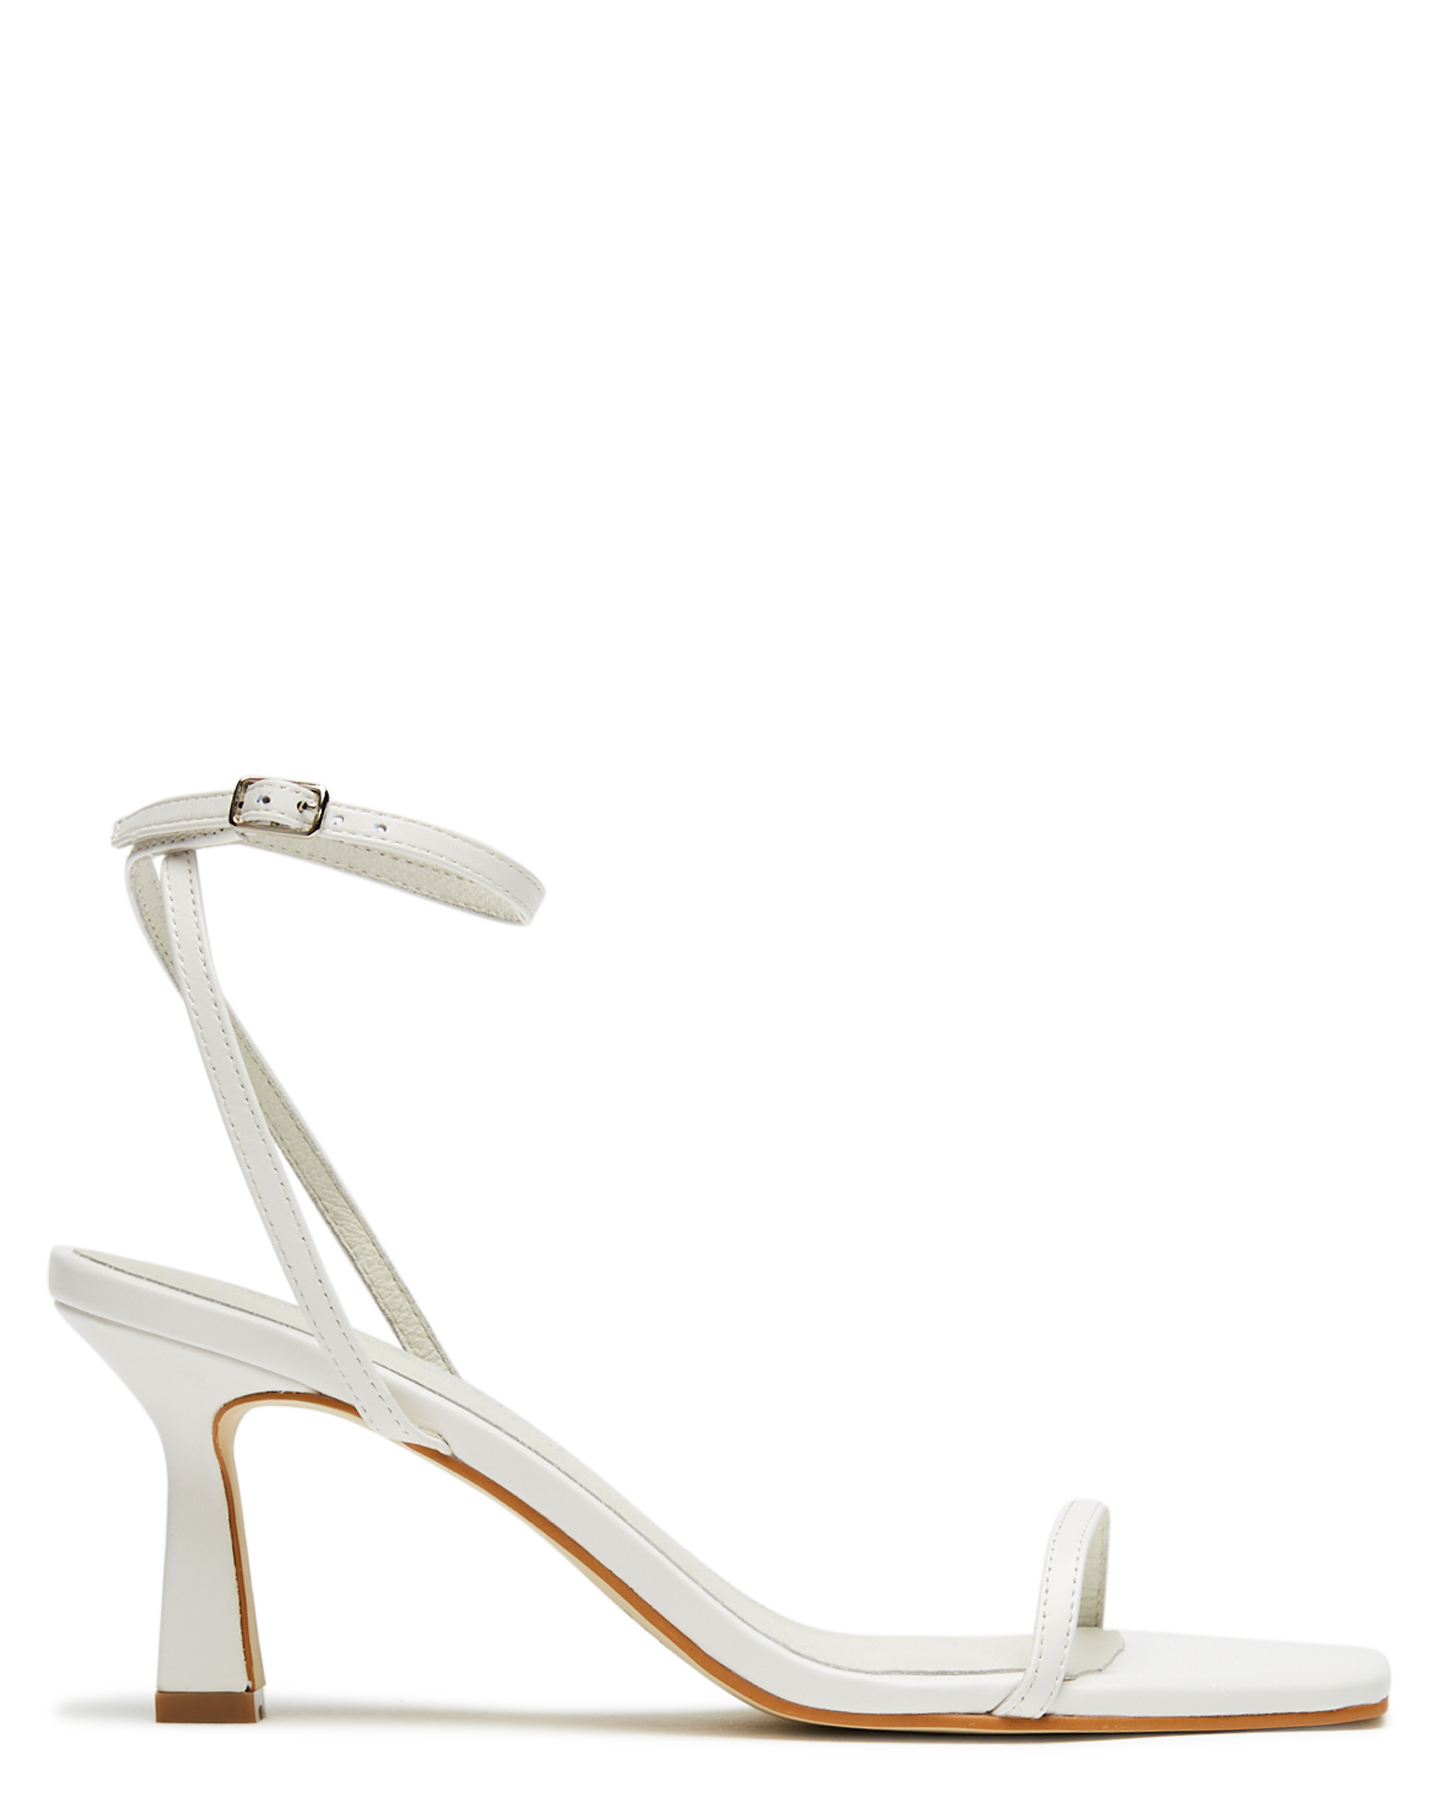 white heels melbourne